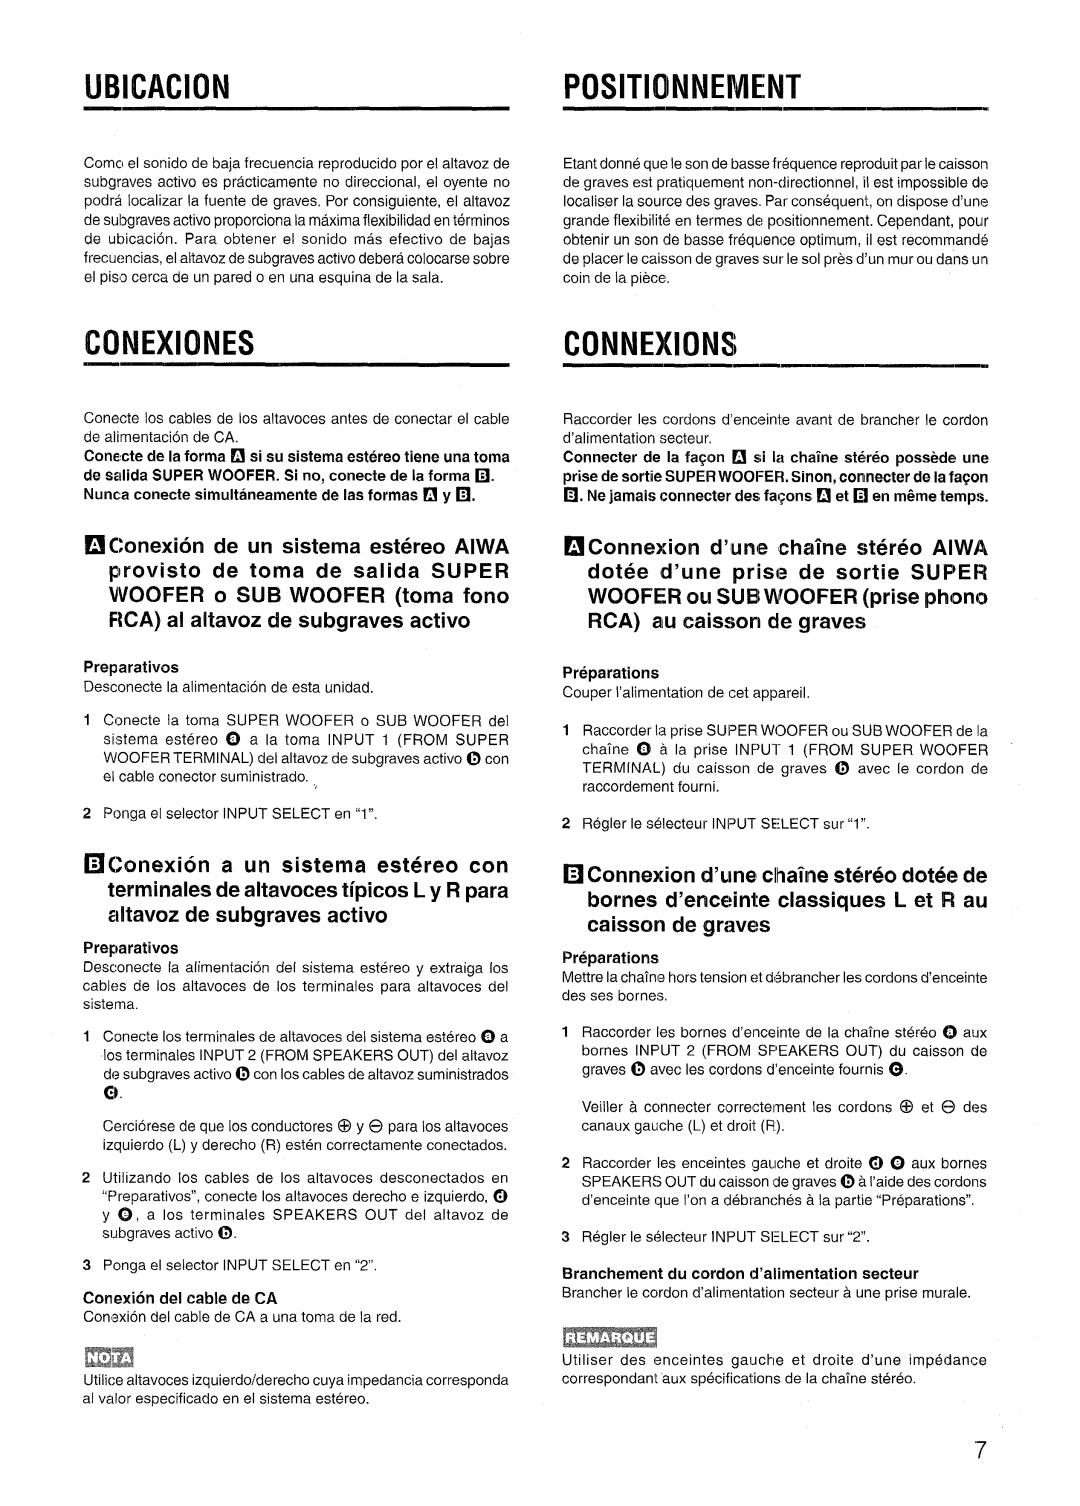 Aiwa TS-W45 manual Ijbicacionpositionneivient, Conexiones, Connexkins 